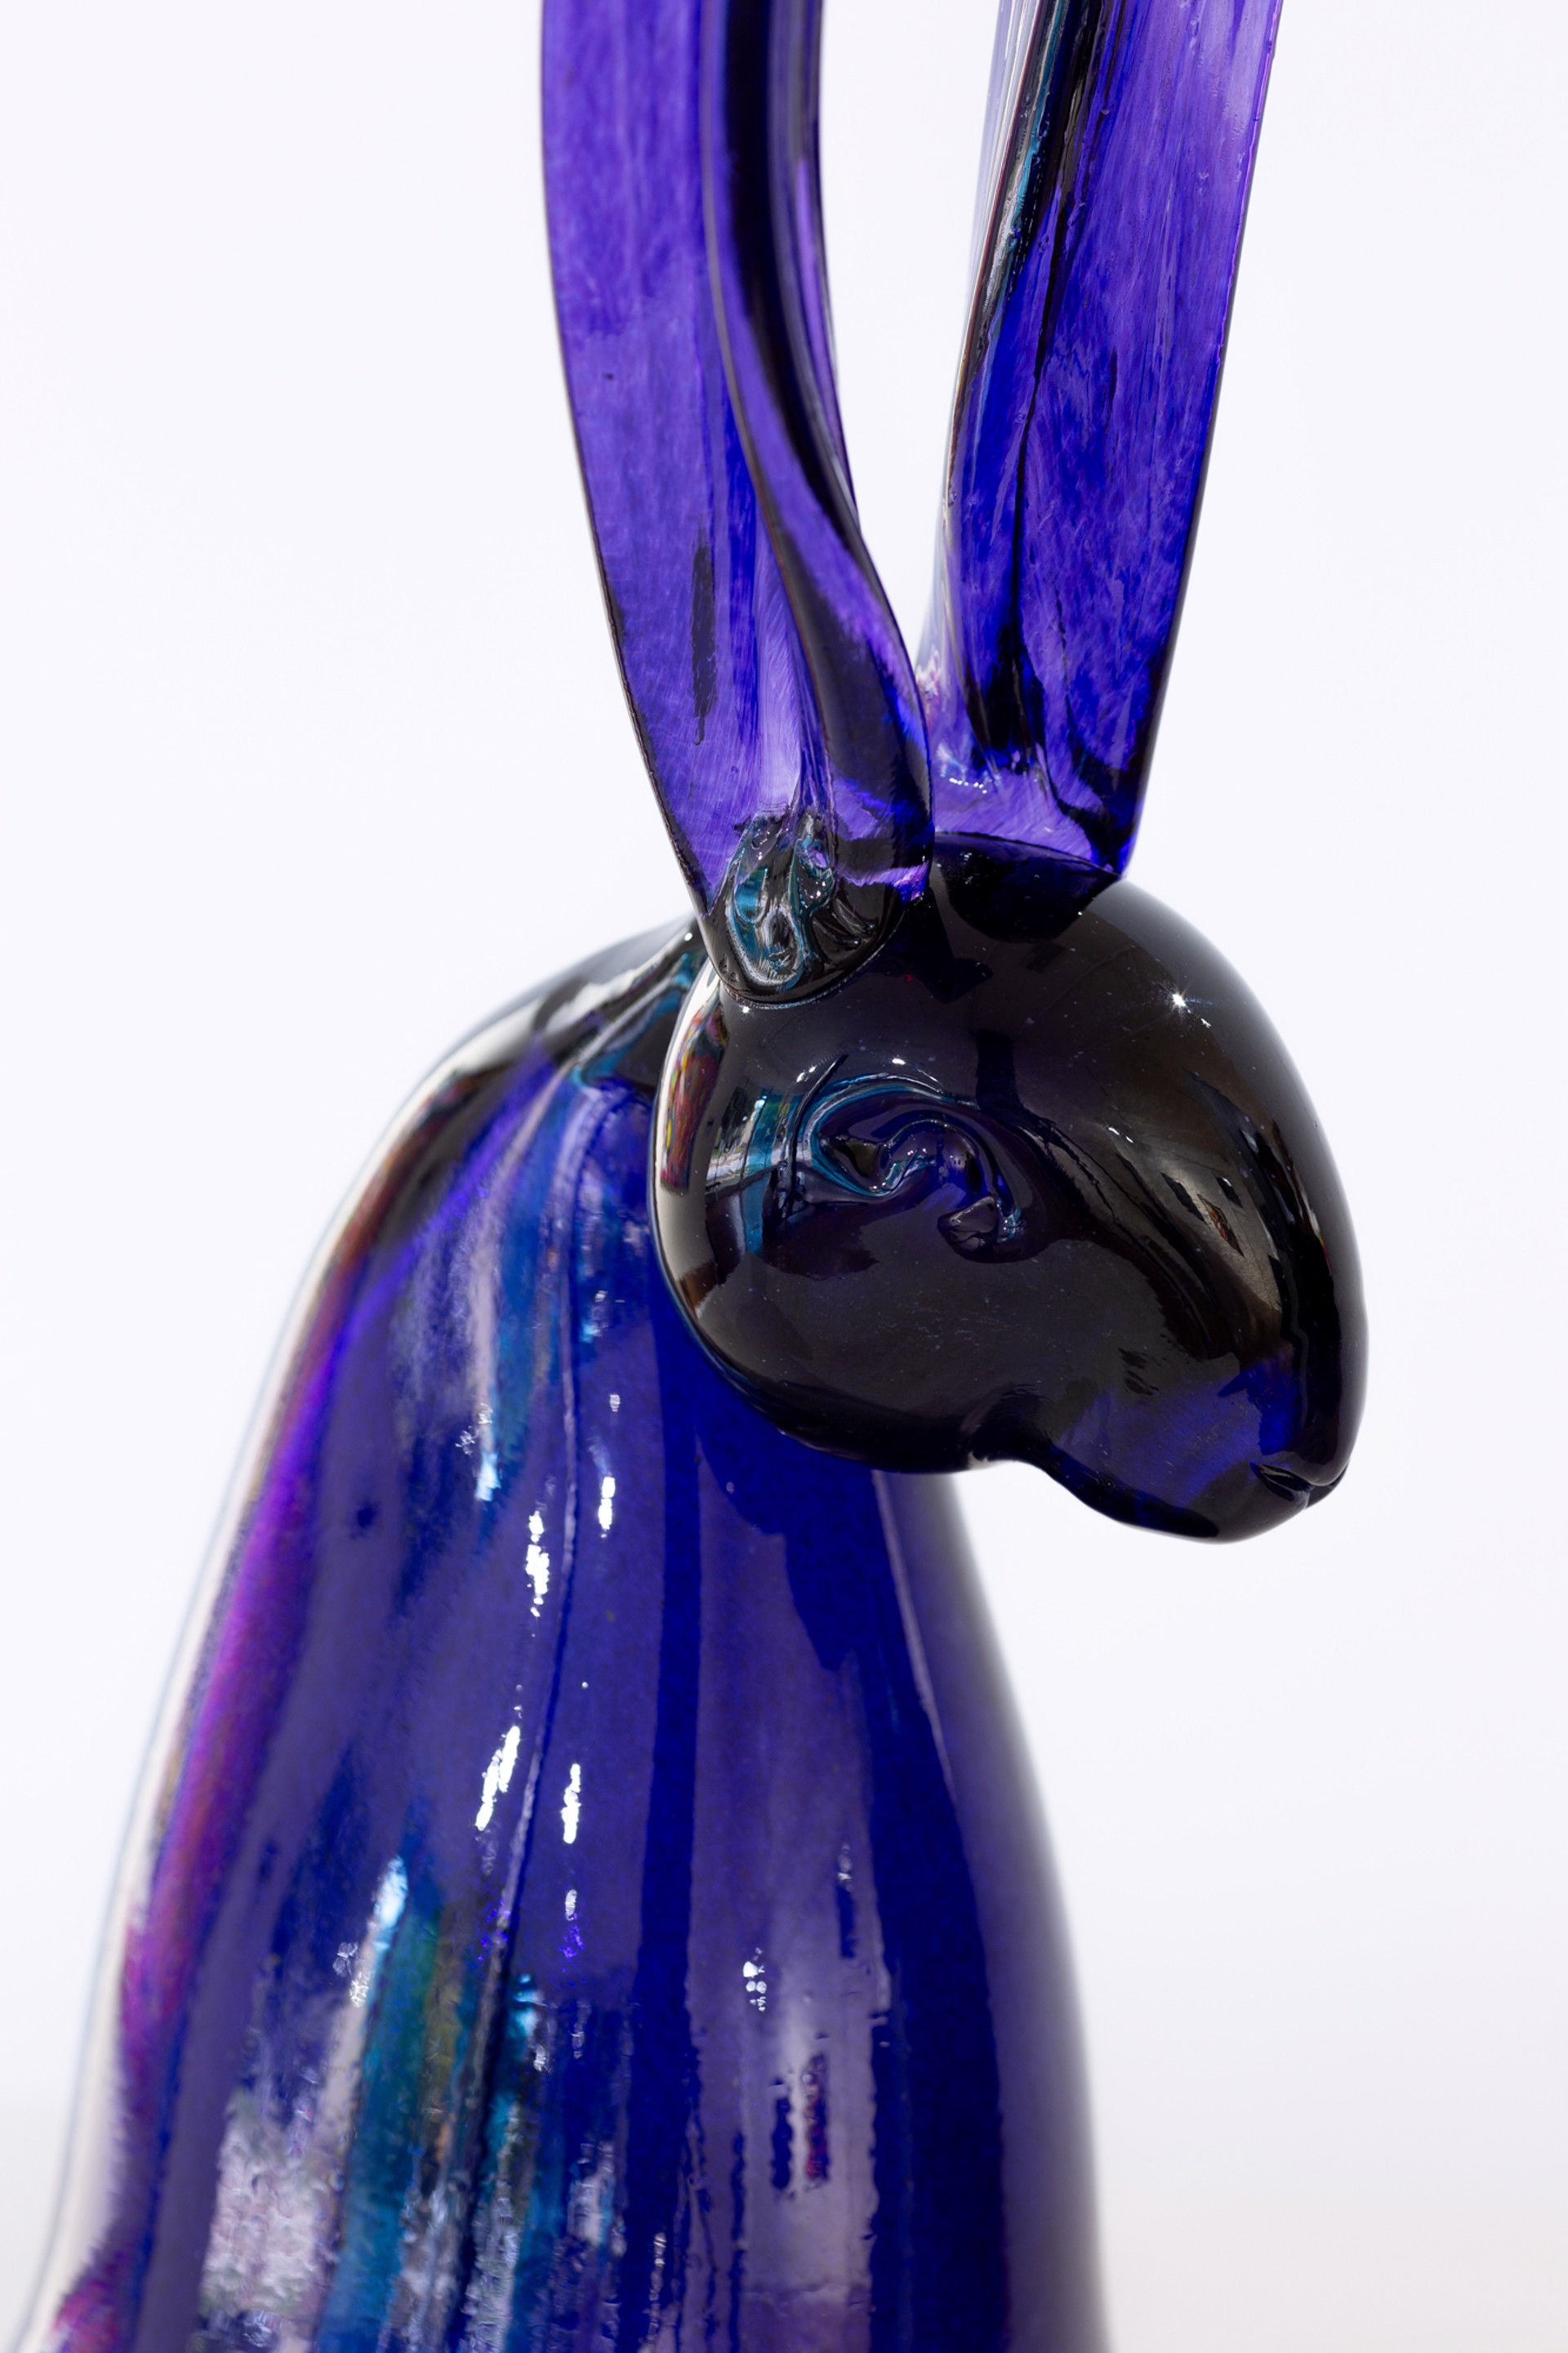 Indigo Bunny by Hunt Slonem